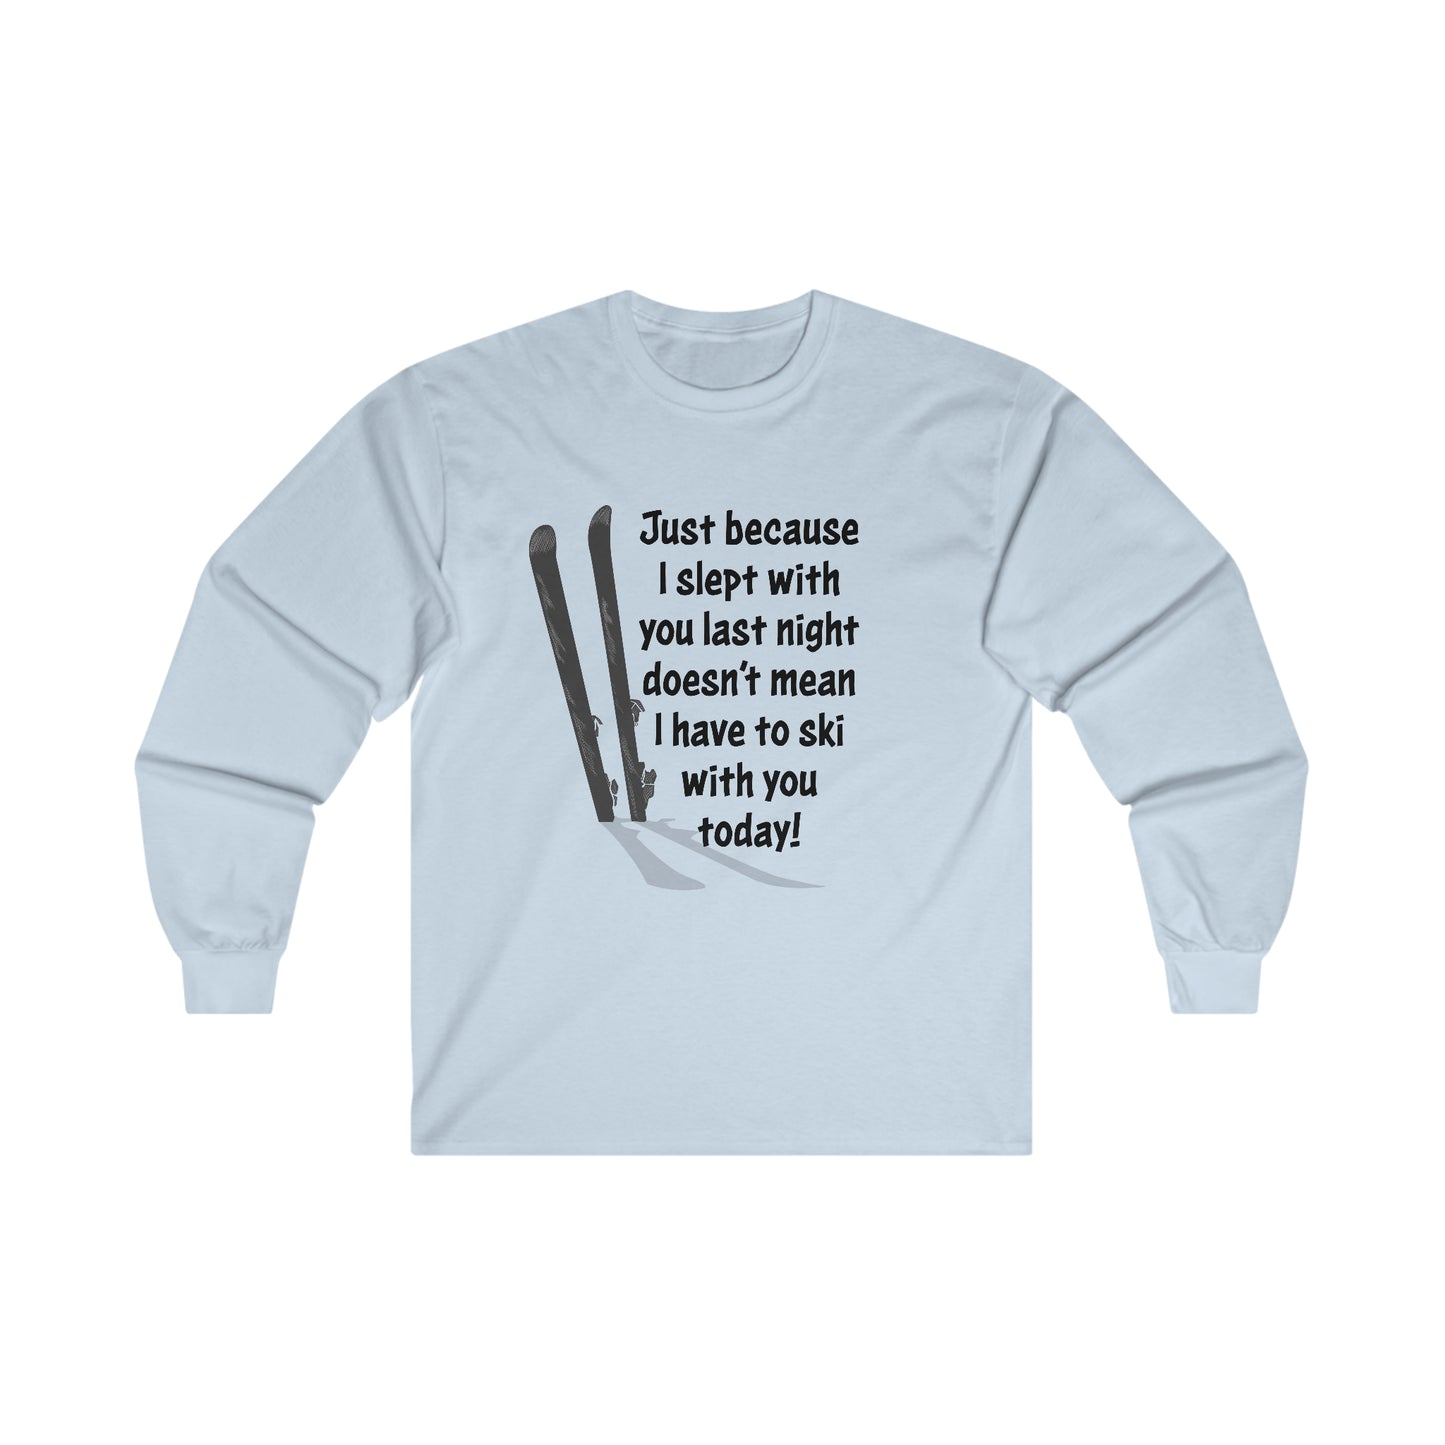 Ski T-Shirt For Ski Bum TShirt For Skier T Shirt For Skiing Shirt For Snow Day Shirt For Skier Tee For Funny Shirt For Sarcastic Humor Gift